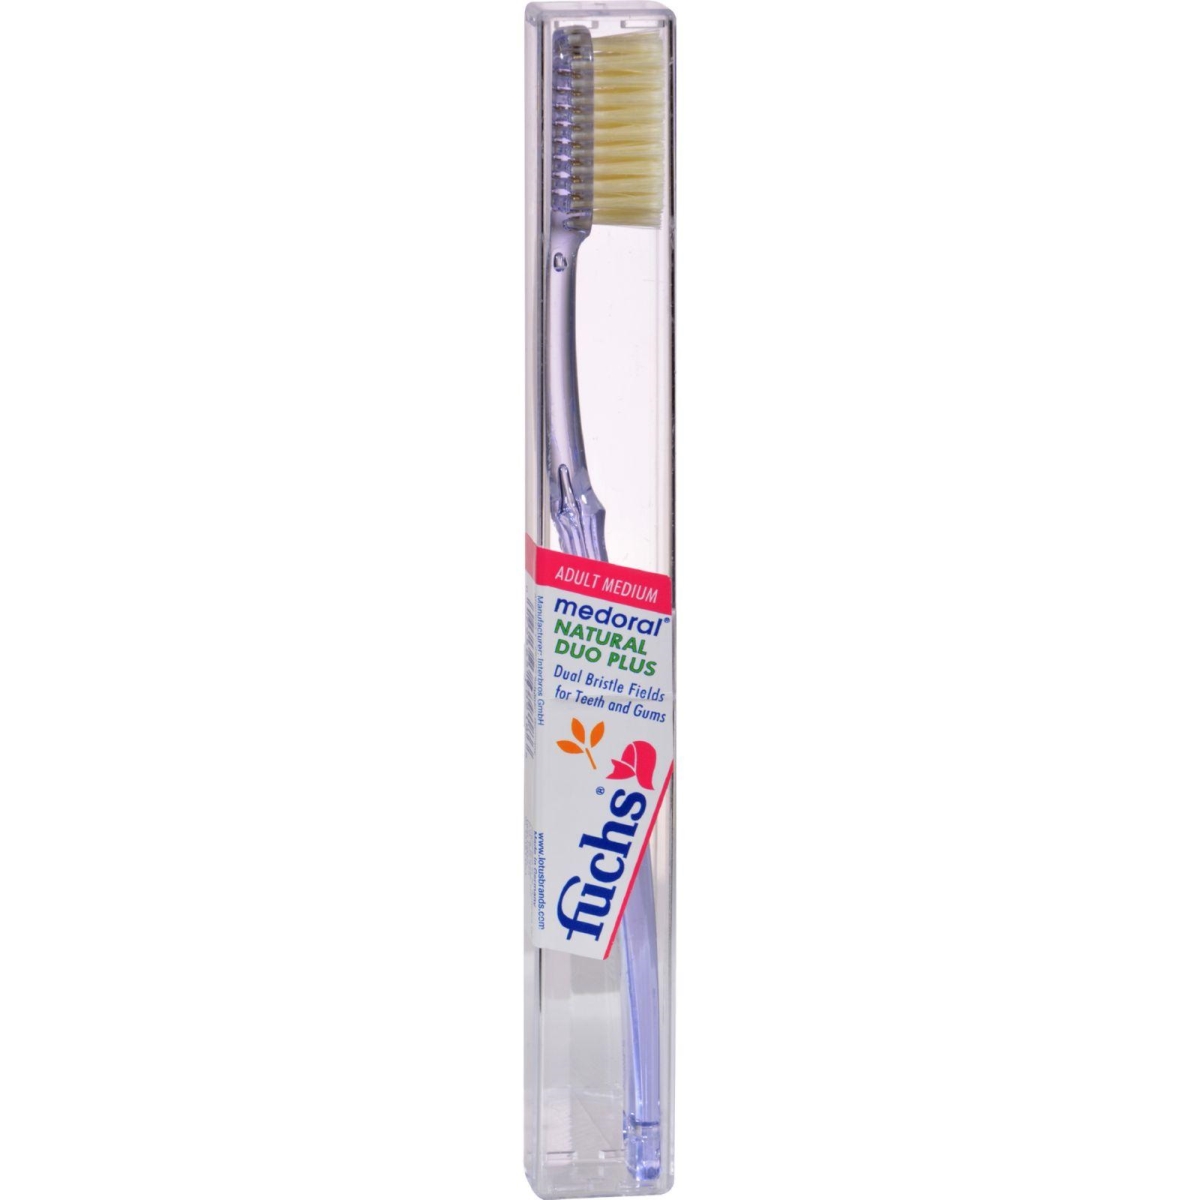 Hg0764761 Adult Medium Medoral Natural Duo Plus Toothbrush, Case Of 10